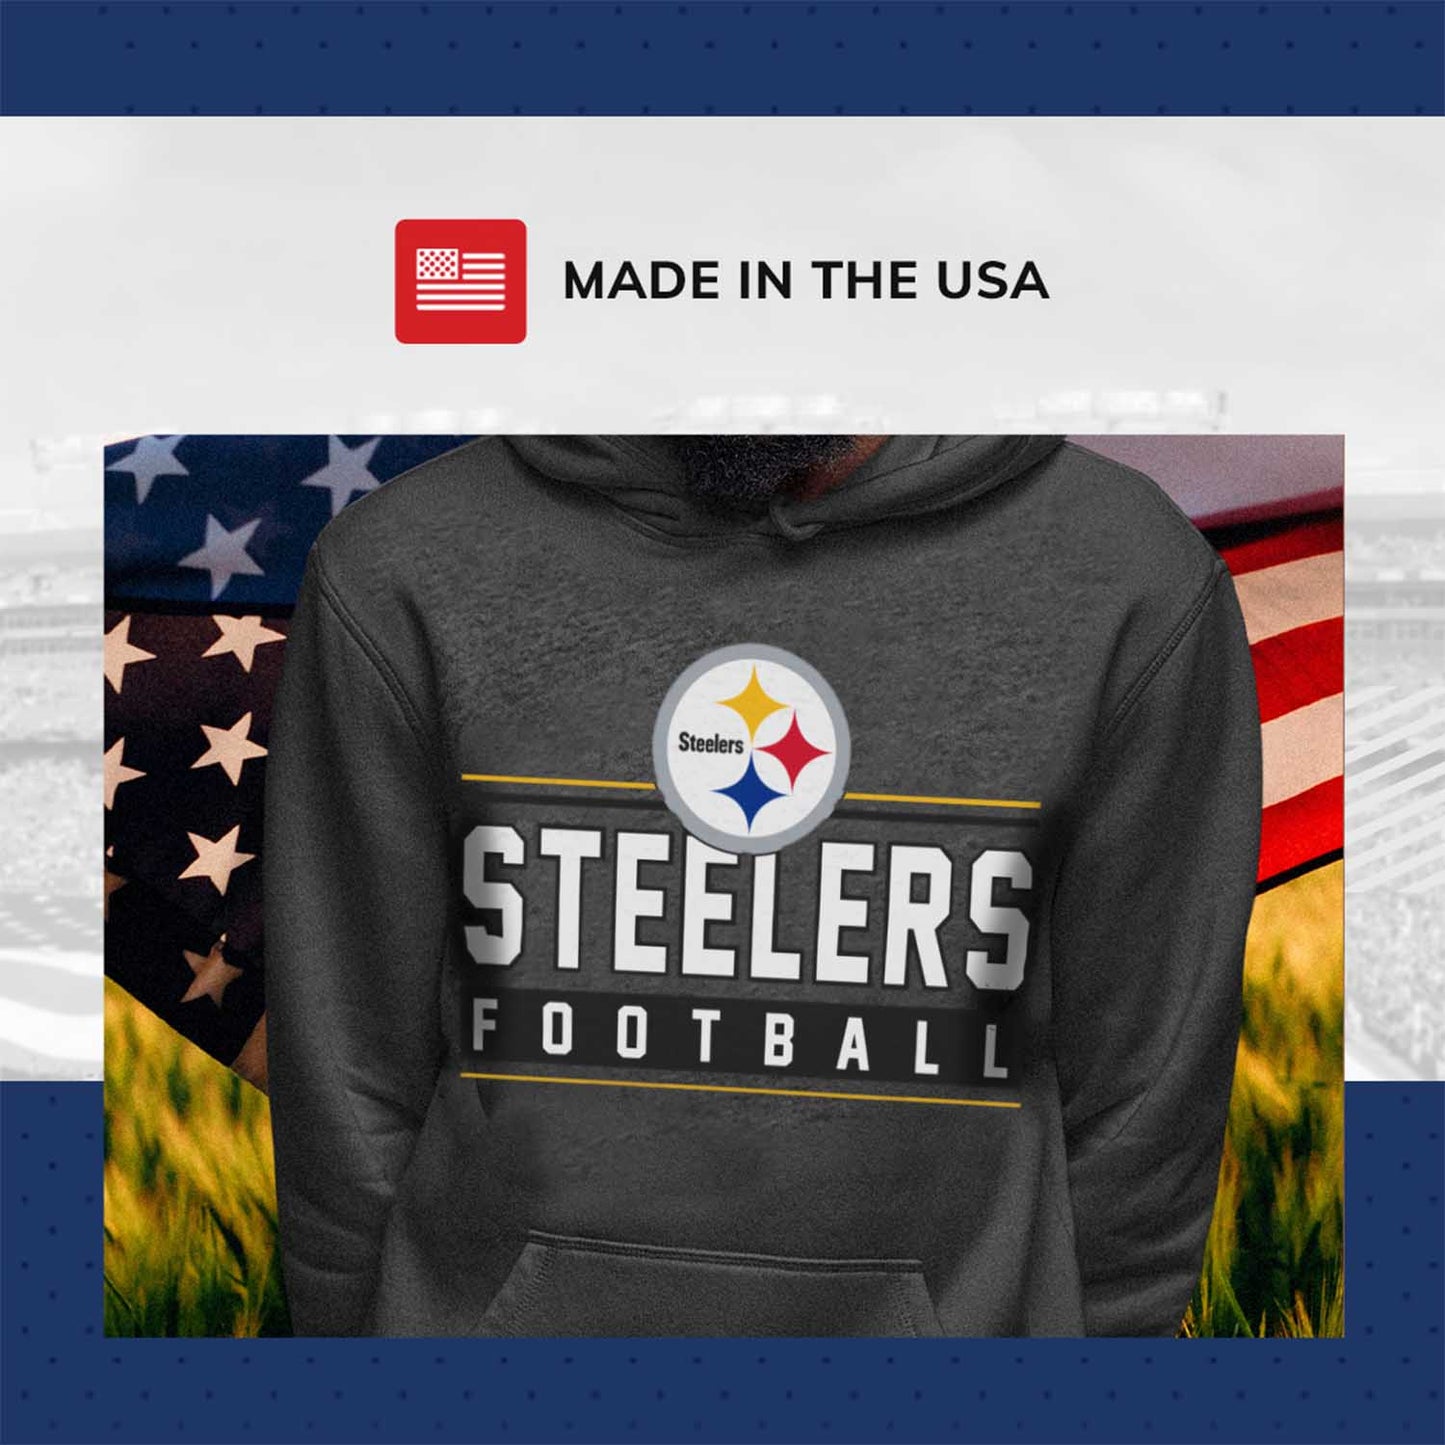 Pittsburgh Steelers NFL Adult True Fan Hooded Charcoal Sweatshirt - Charcoal